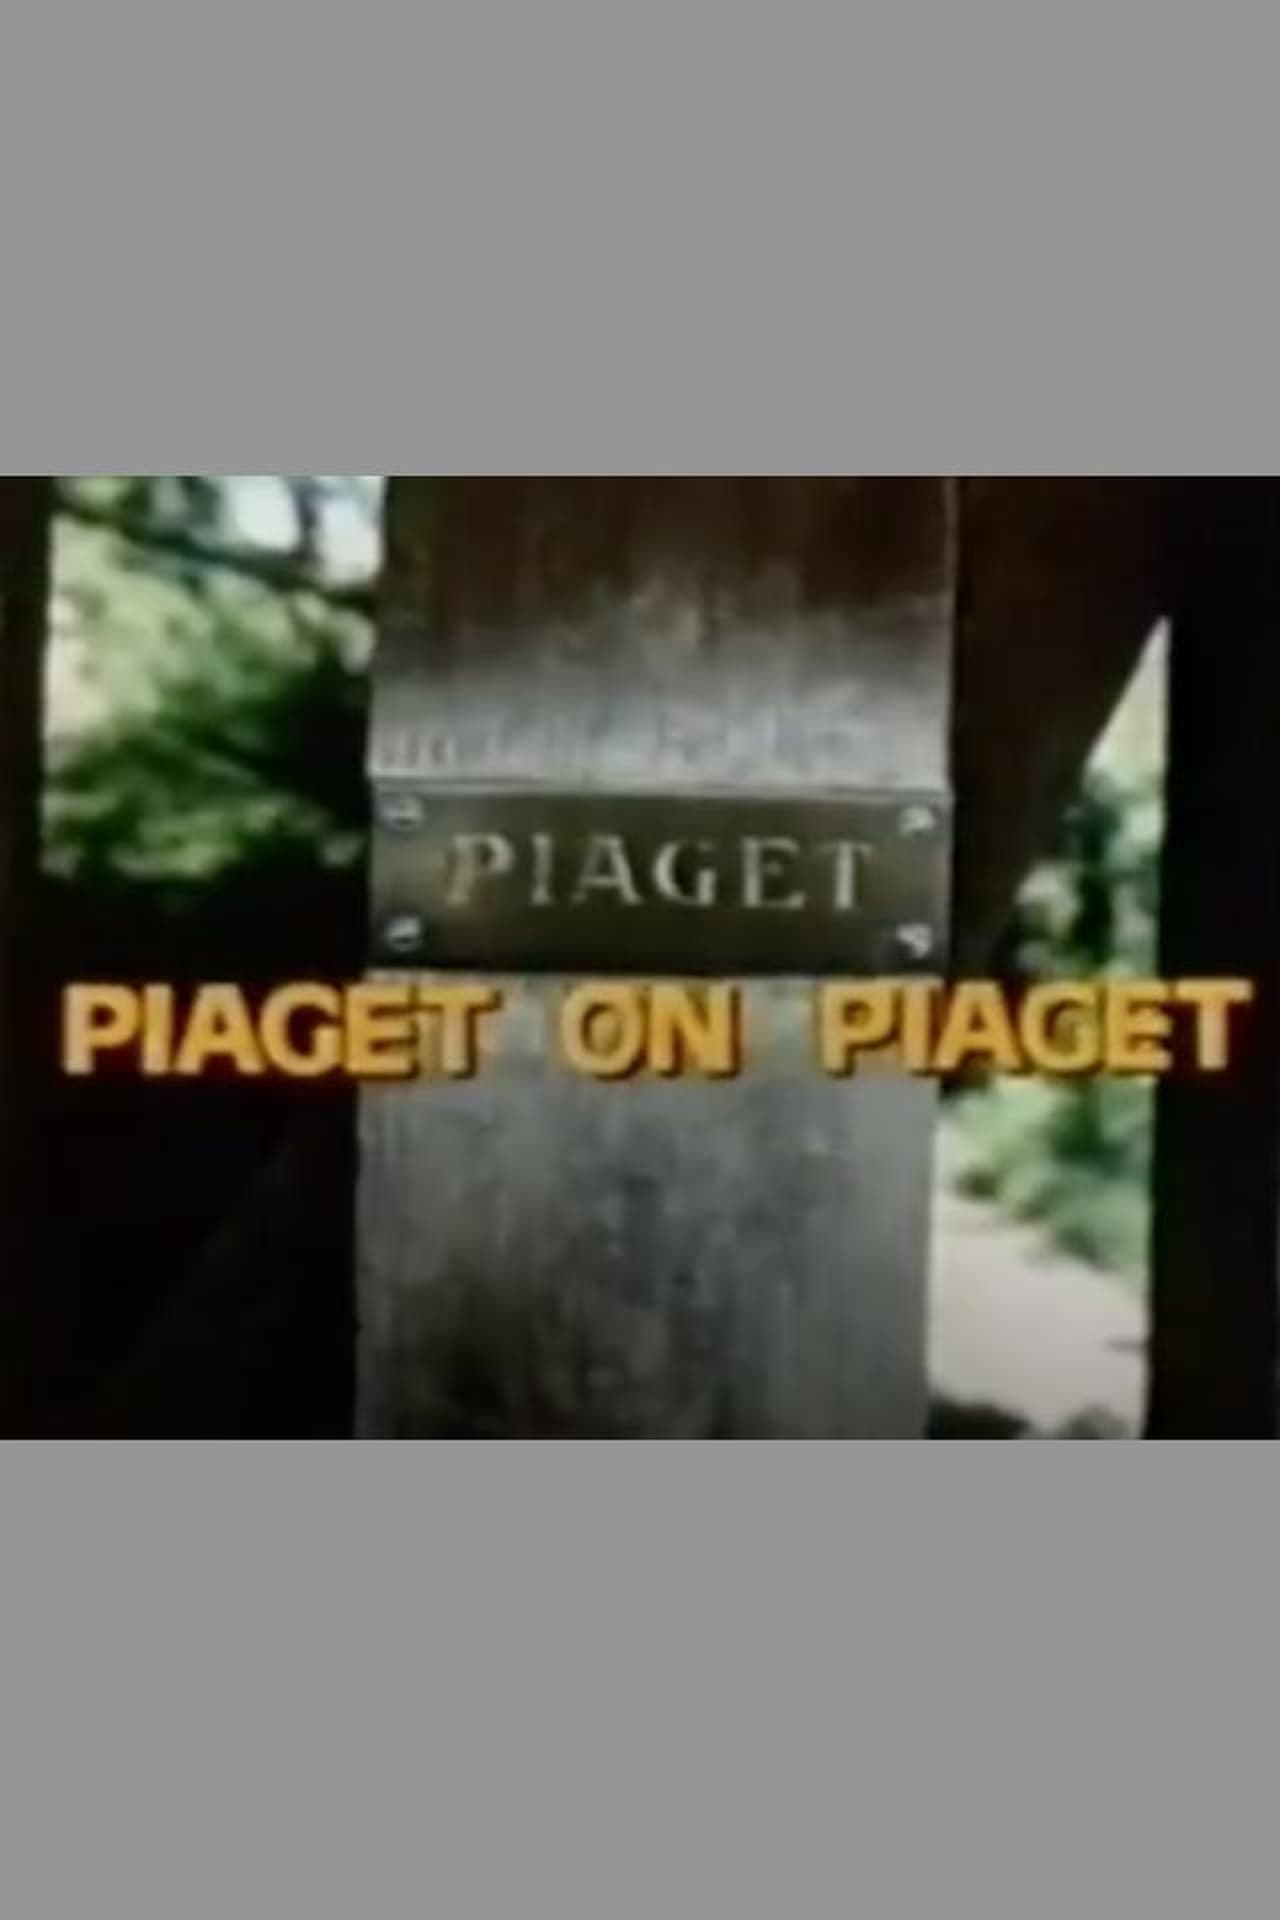 The genetic epistemology of Jean Piaget